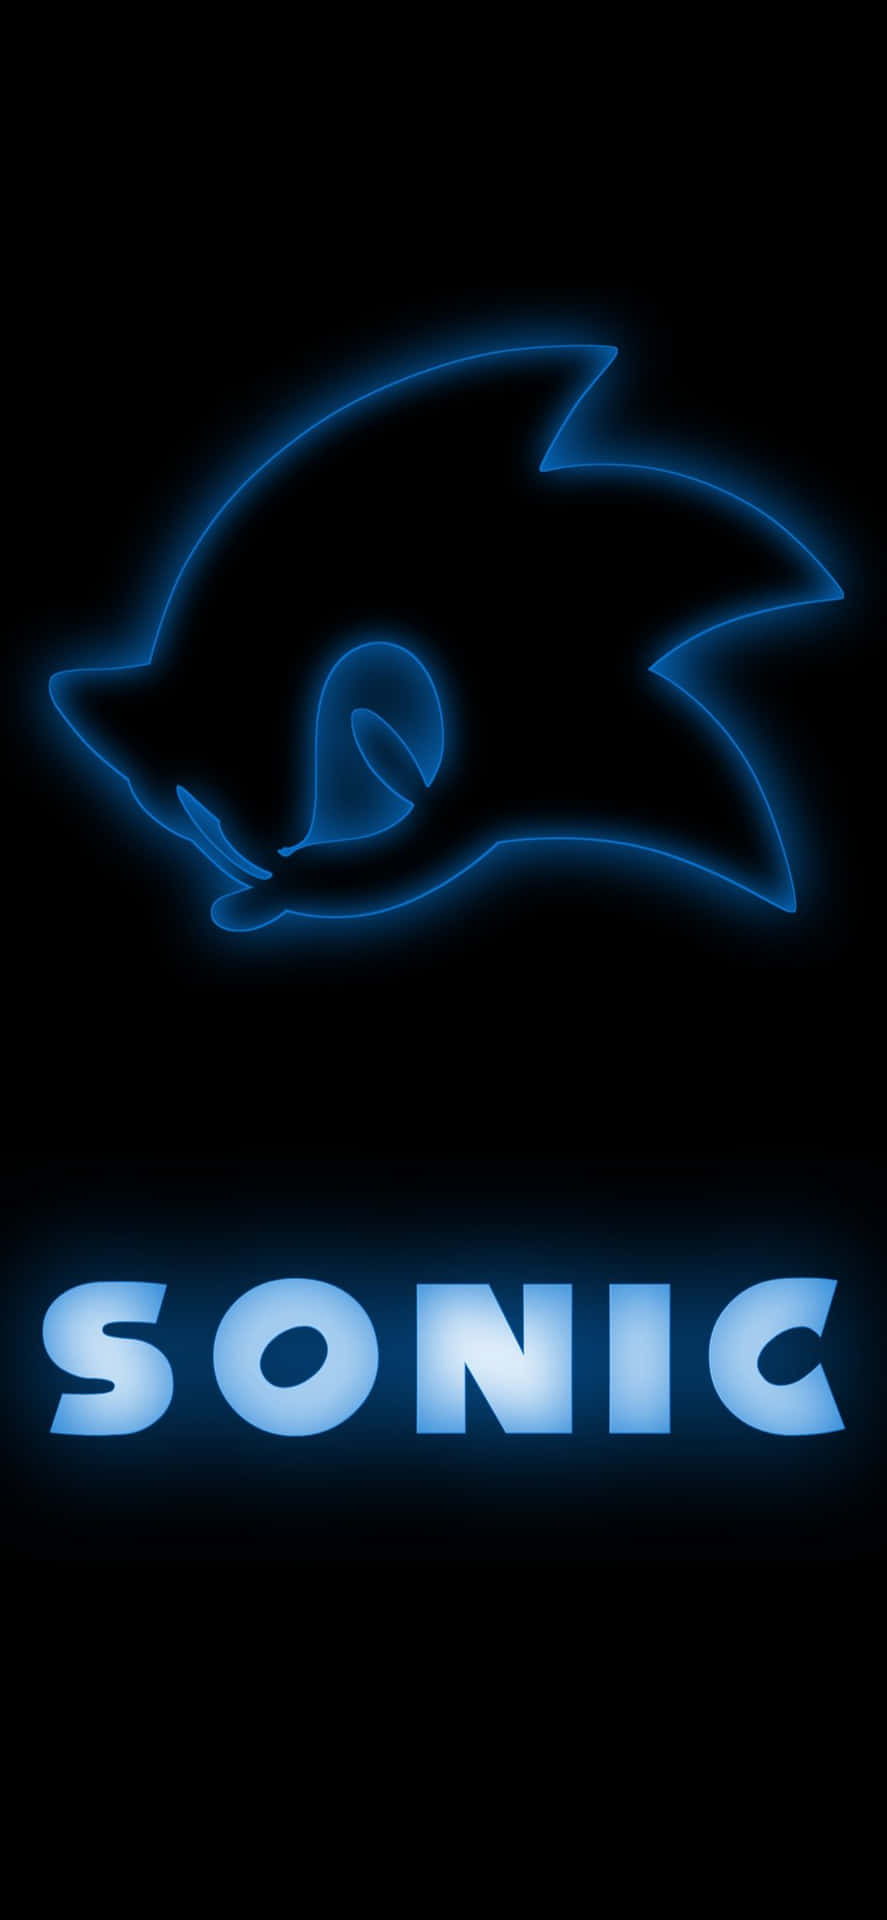 Sonic the Hedgehog Emblem with Blue Background Wallpaper